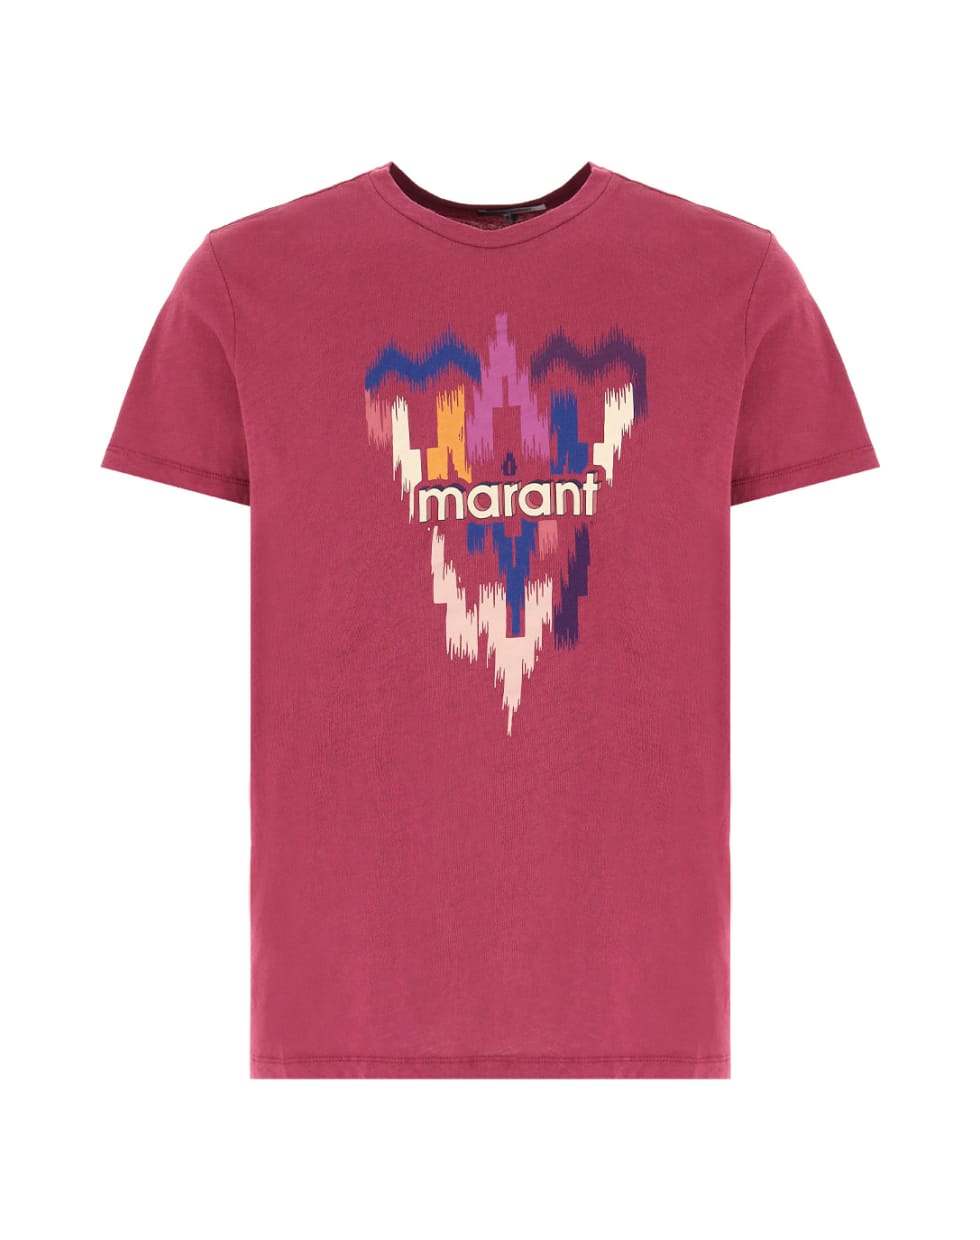 Isabel Marant T-shirt - Burgundy